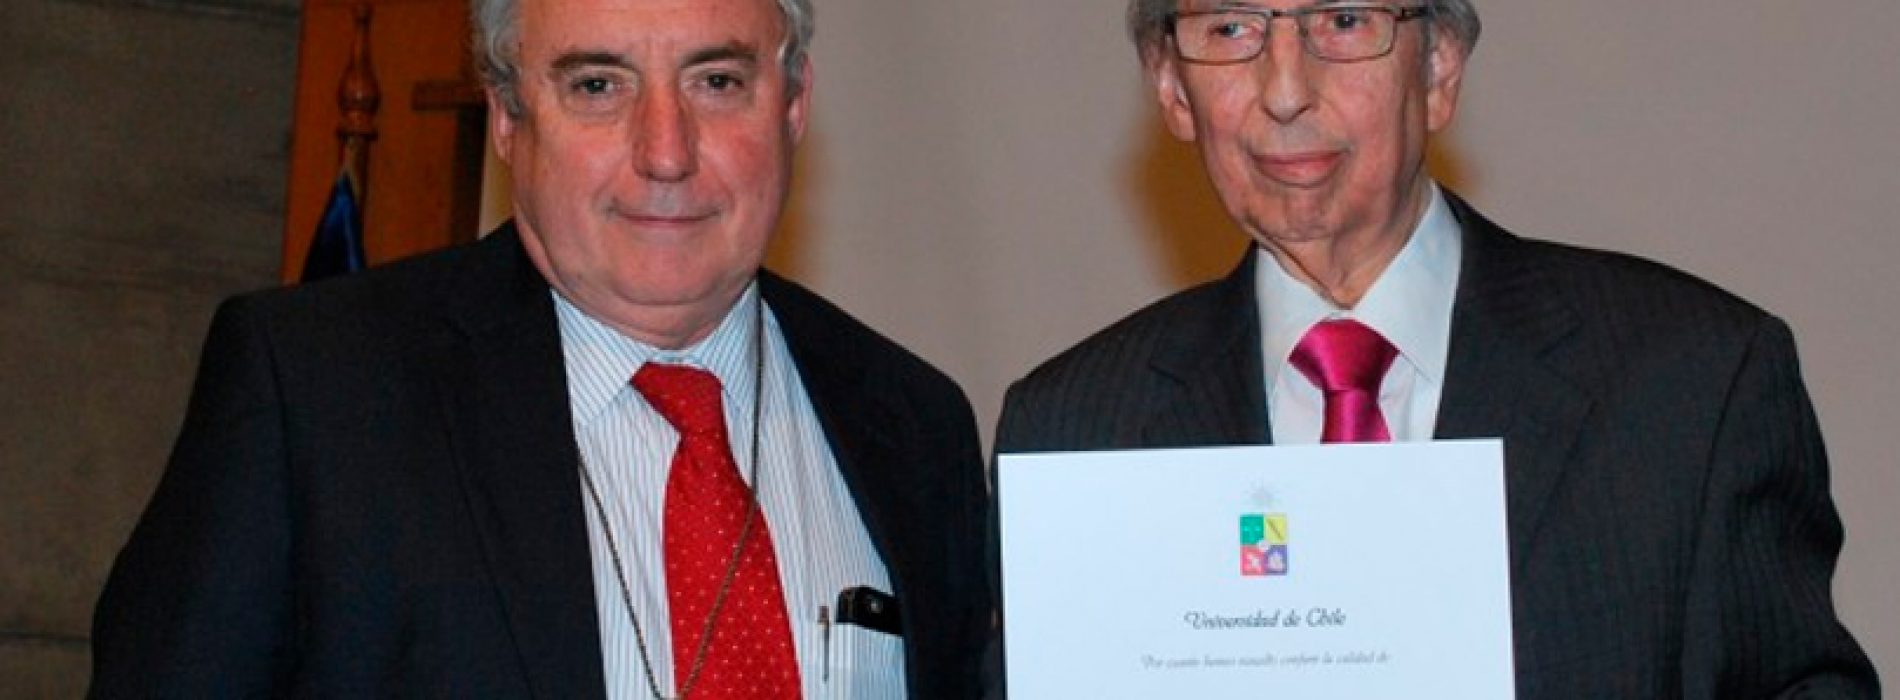 University of Chile distinguishes the scholar Jorge Valenzuela Pedevila as Professor Emeritus